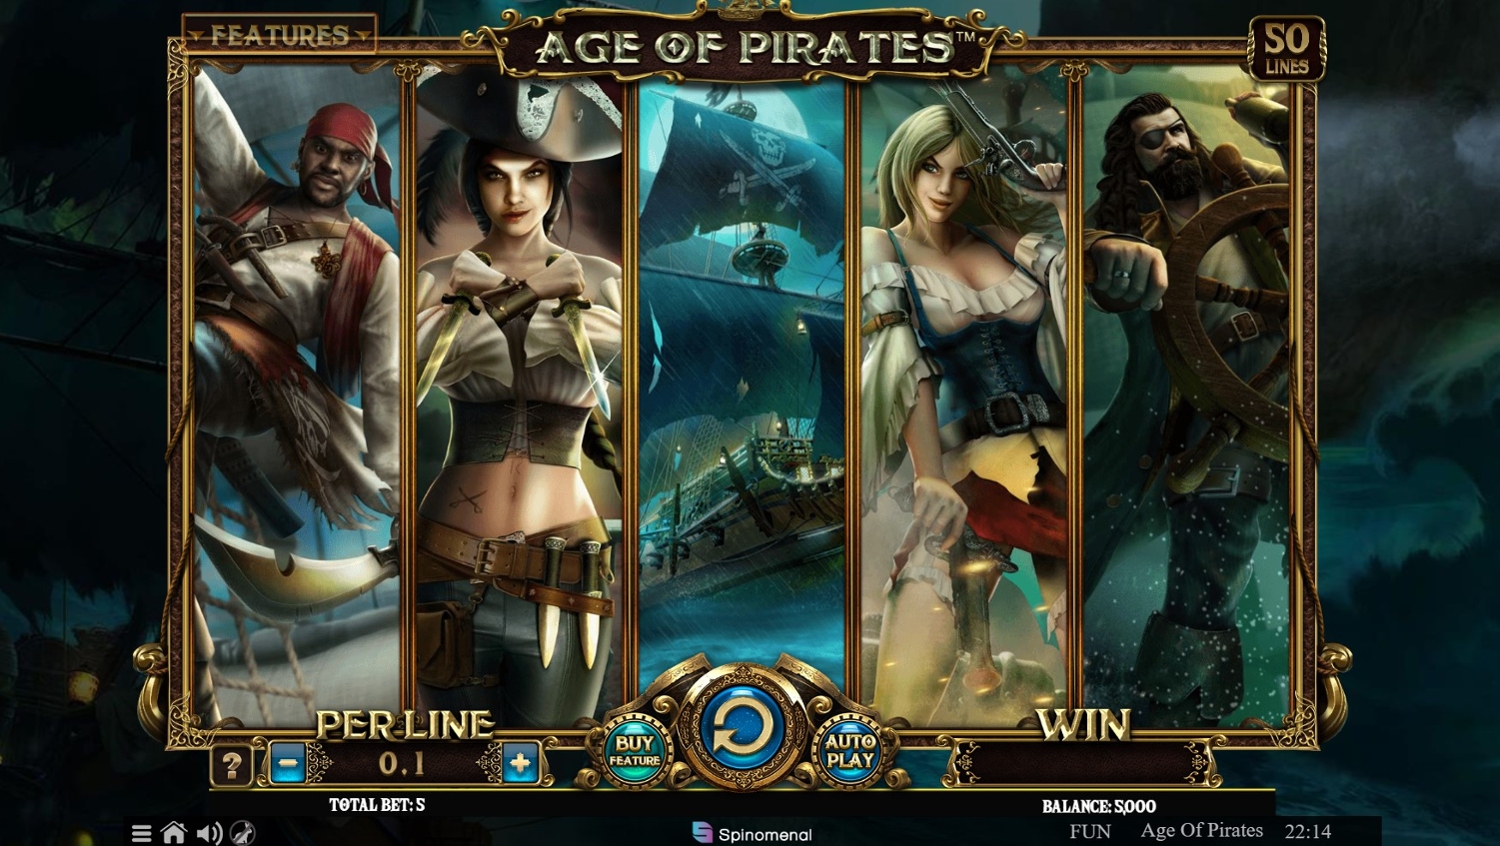 age of pirates